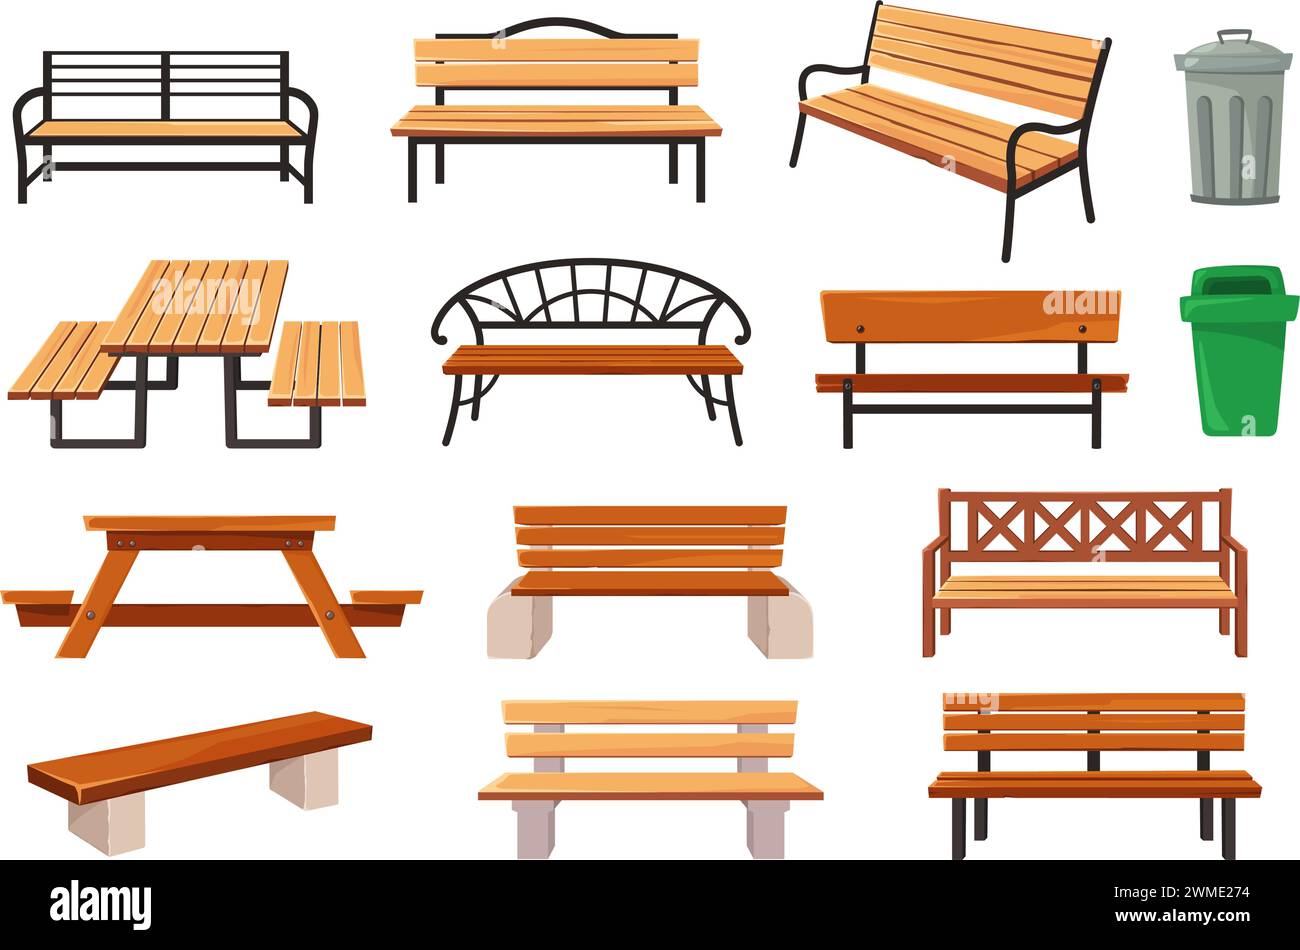 Garden bench. Outdoor furniture, park benches, waste bins and picnic tables cartoon vector illustration set Stock Vector